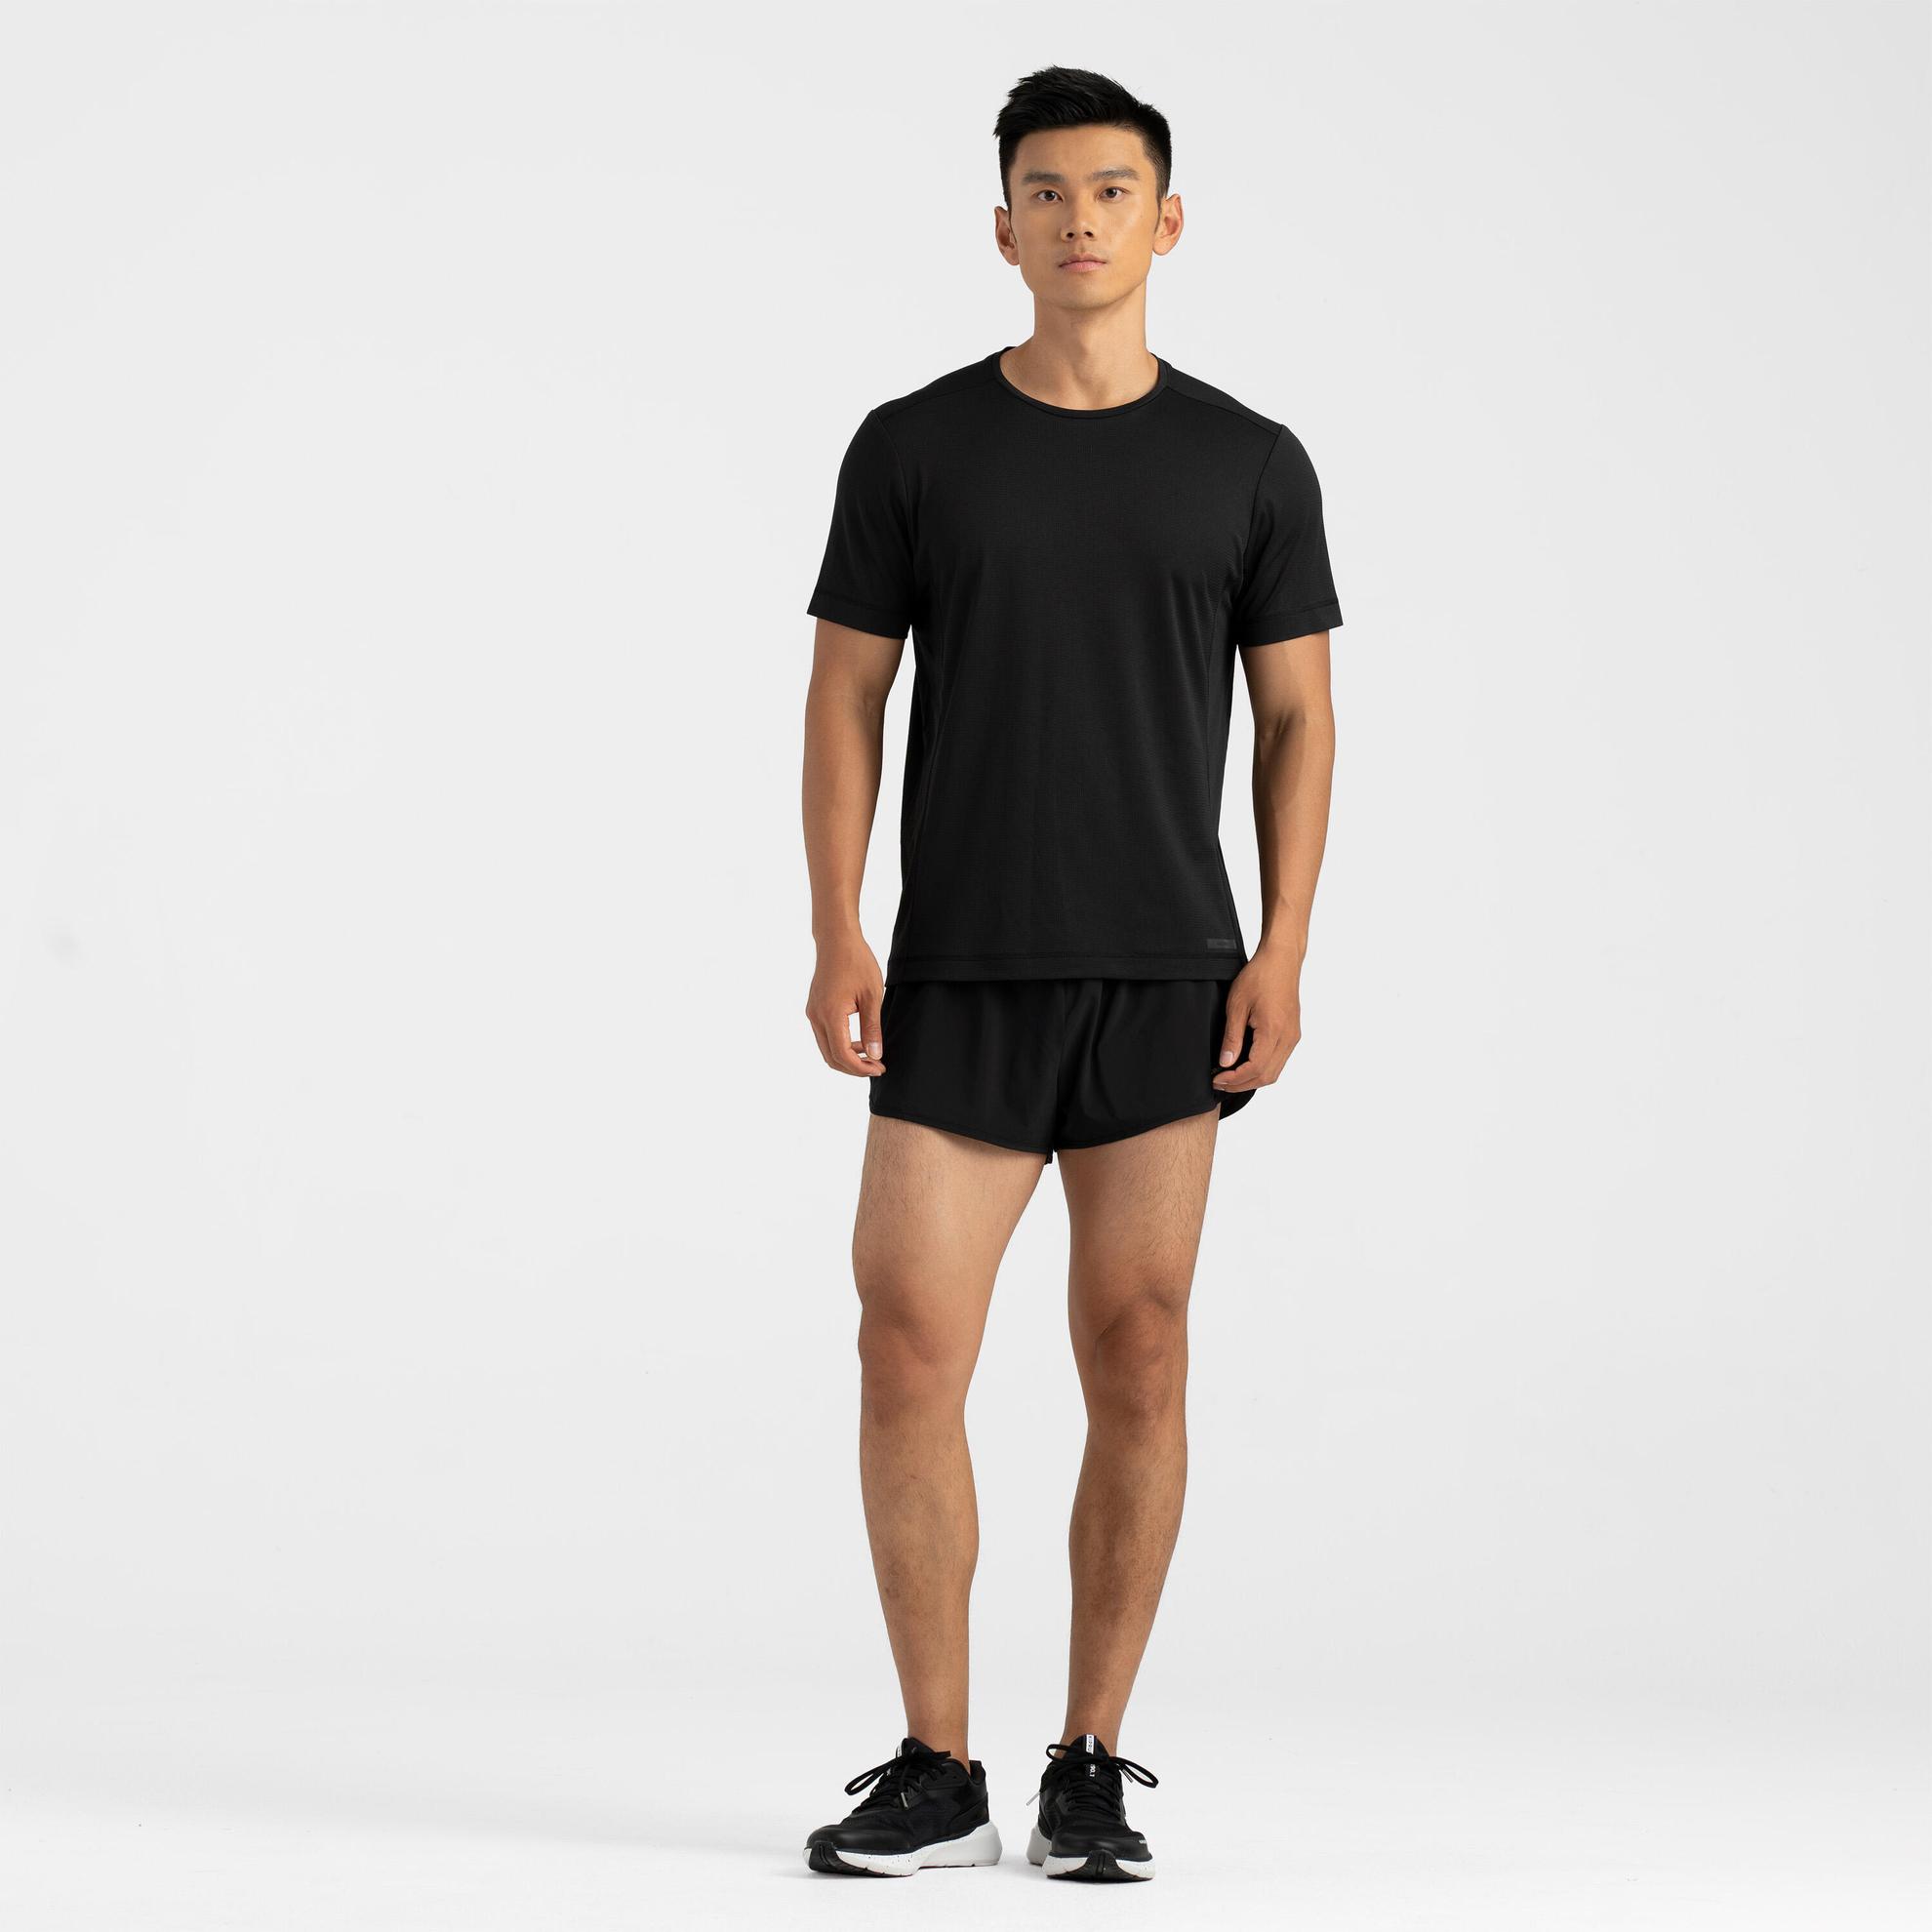 Men's Running T-Shirt - Dry Black offers at $9 in Decathlon